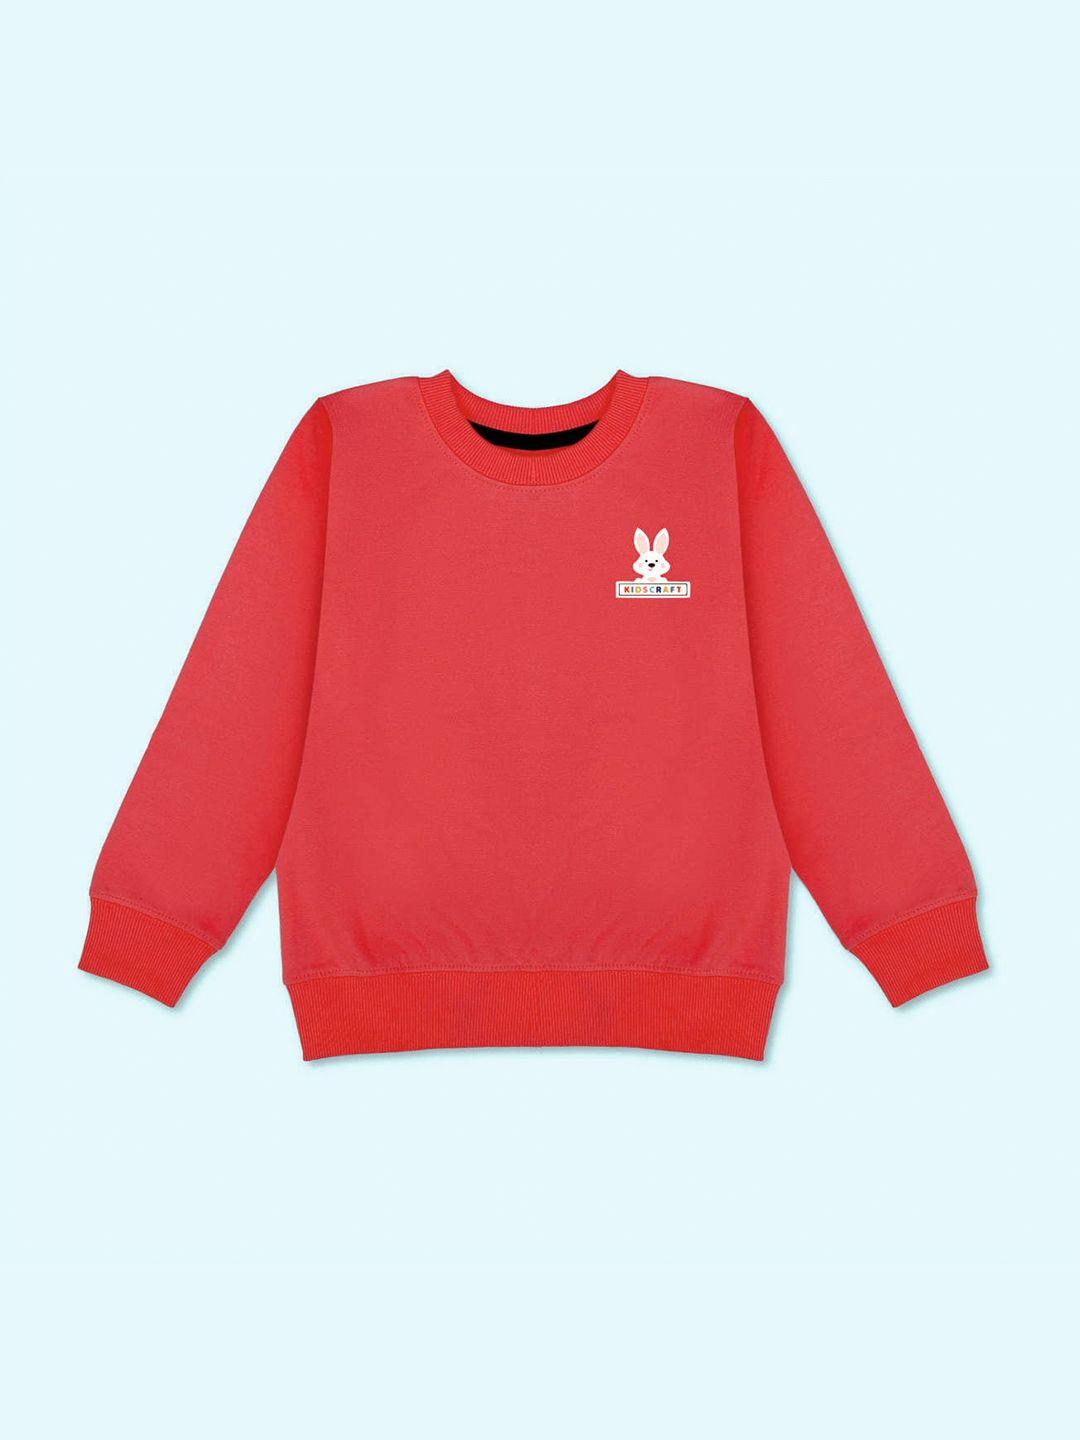 kidscraft boys red sweatshirt